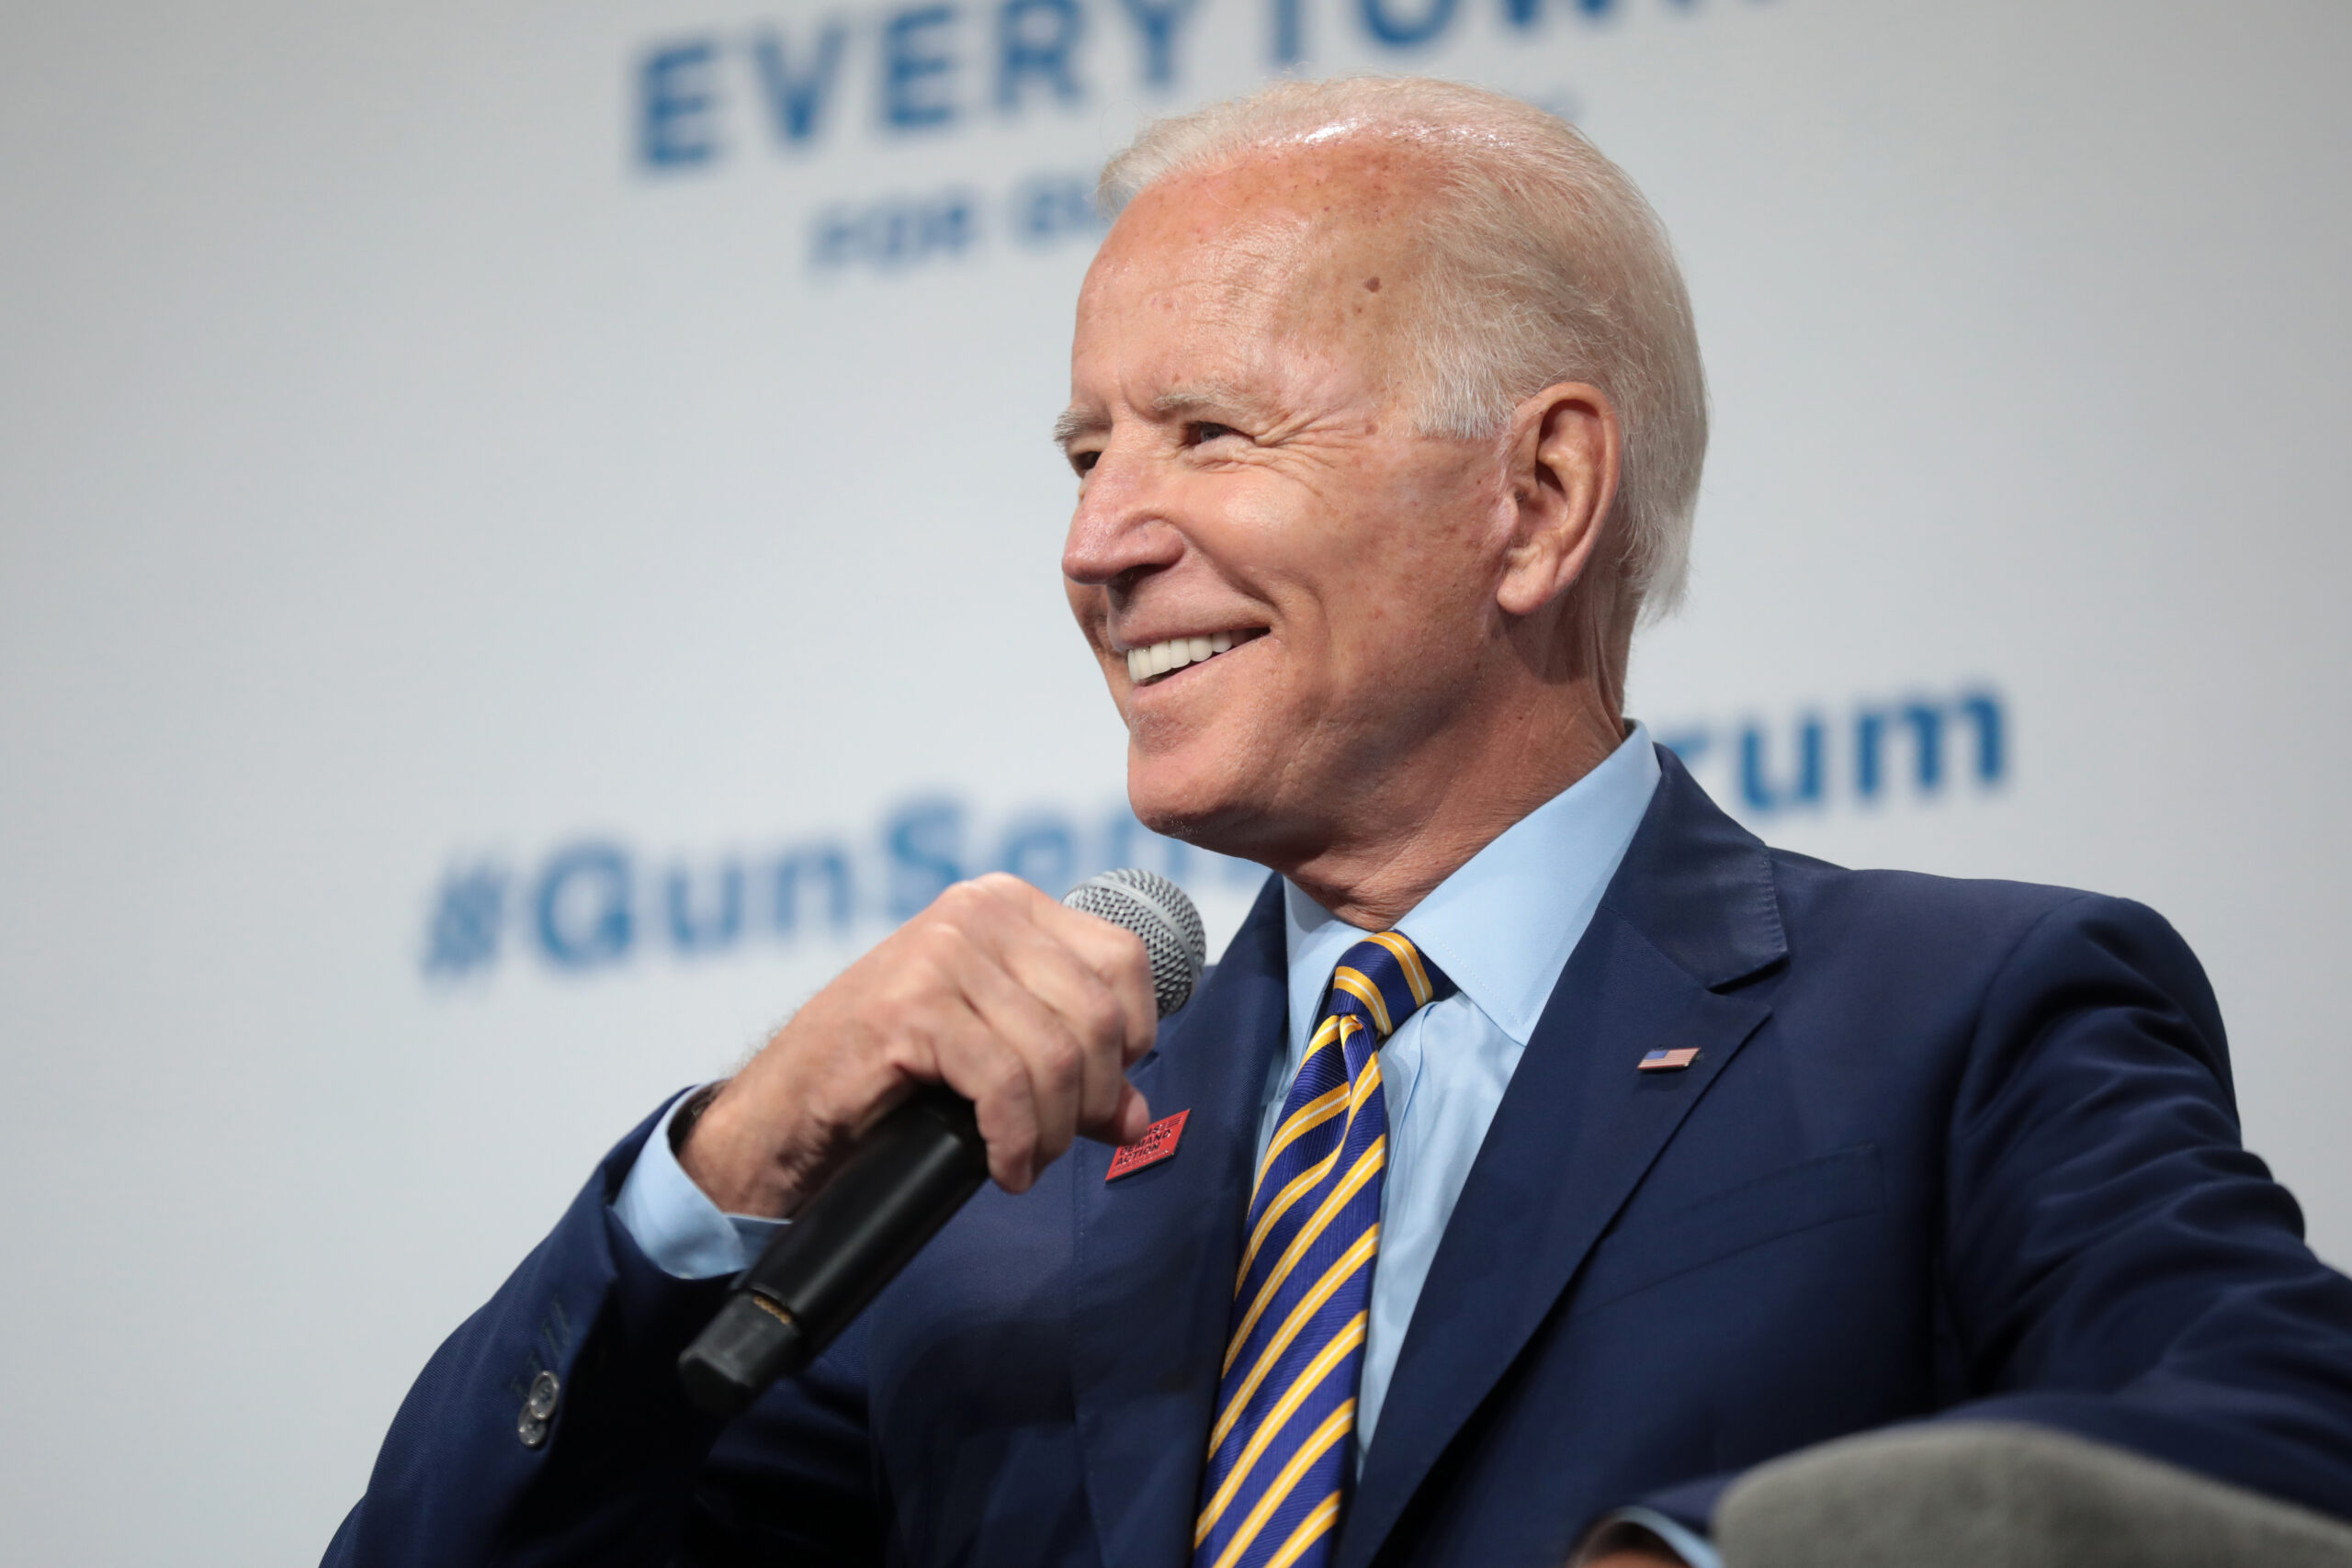 Joe Biden talks at the Presidential Gun Sense Forum in 2019